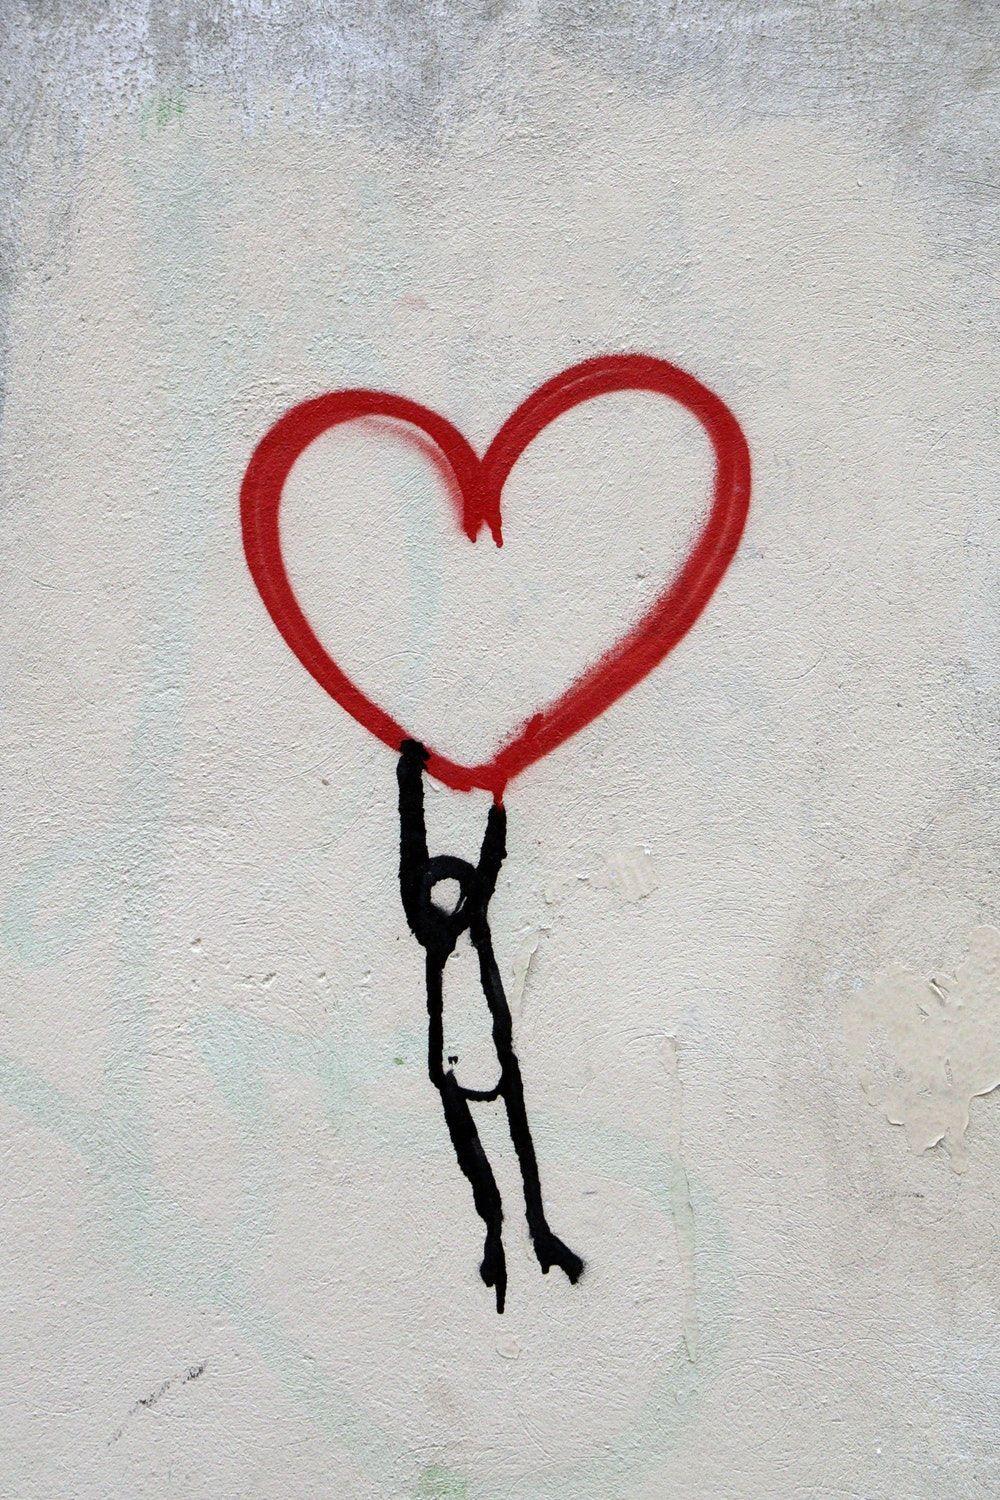 Gray and Red Heart Logo - Love Balloon photo